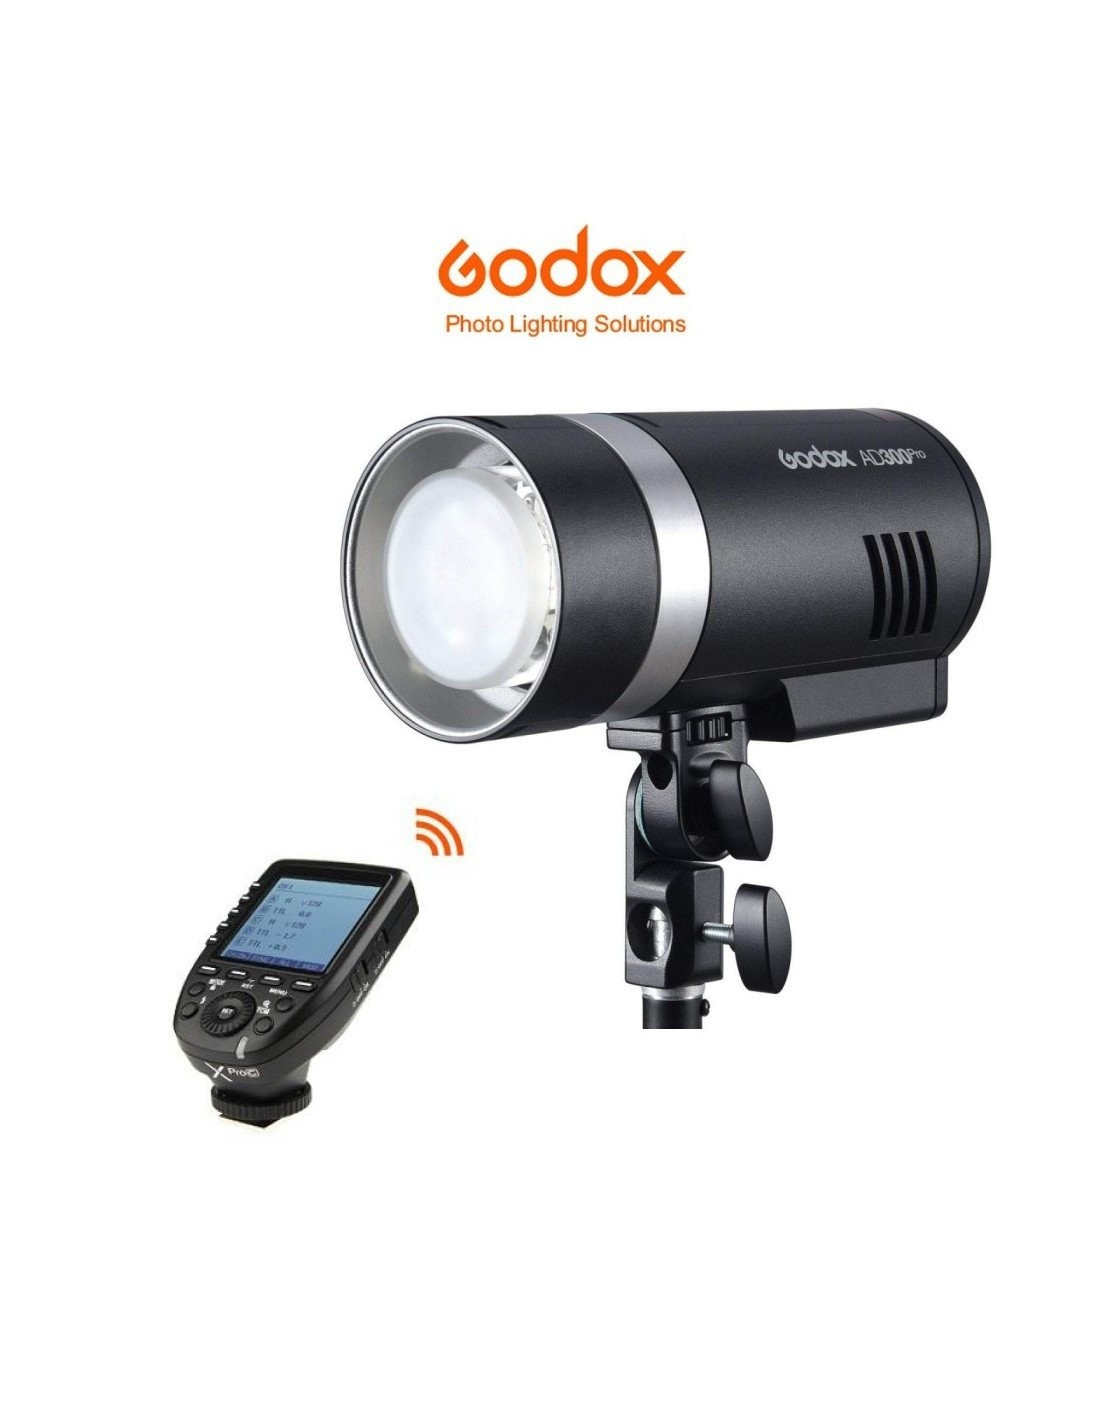 Kit Godox ad300pro y transmisor XPro, el mejor equipo foto exteriores